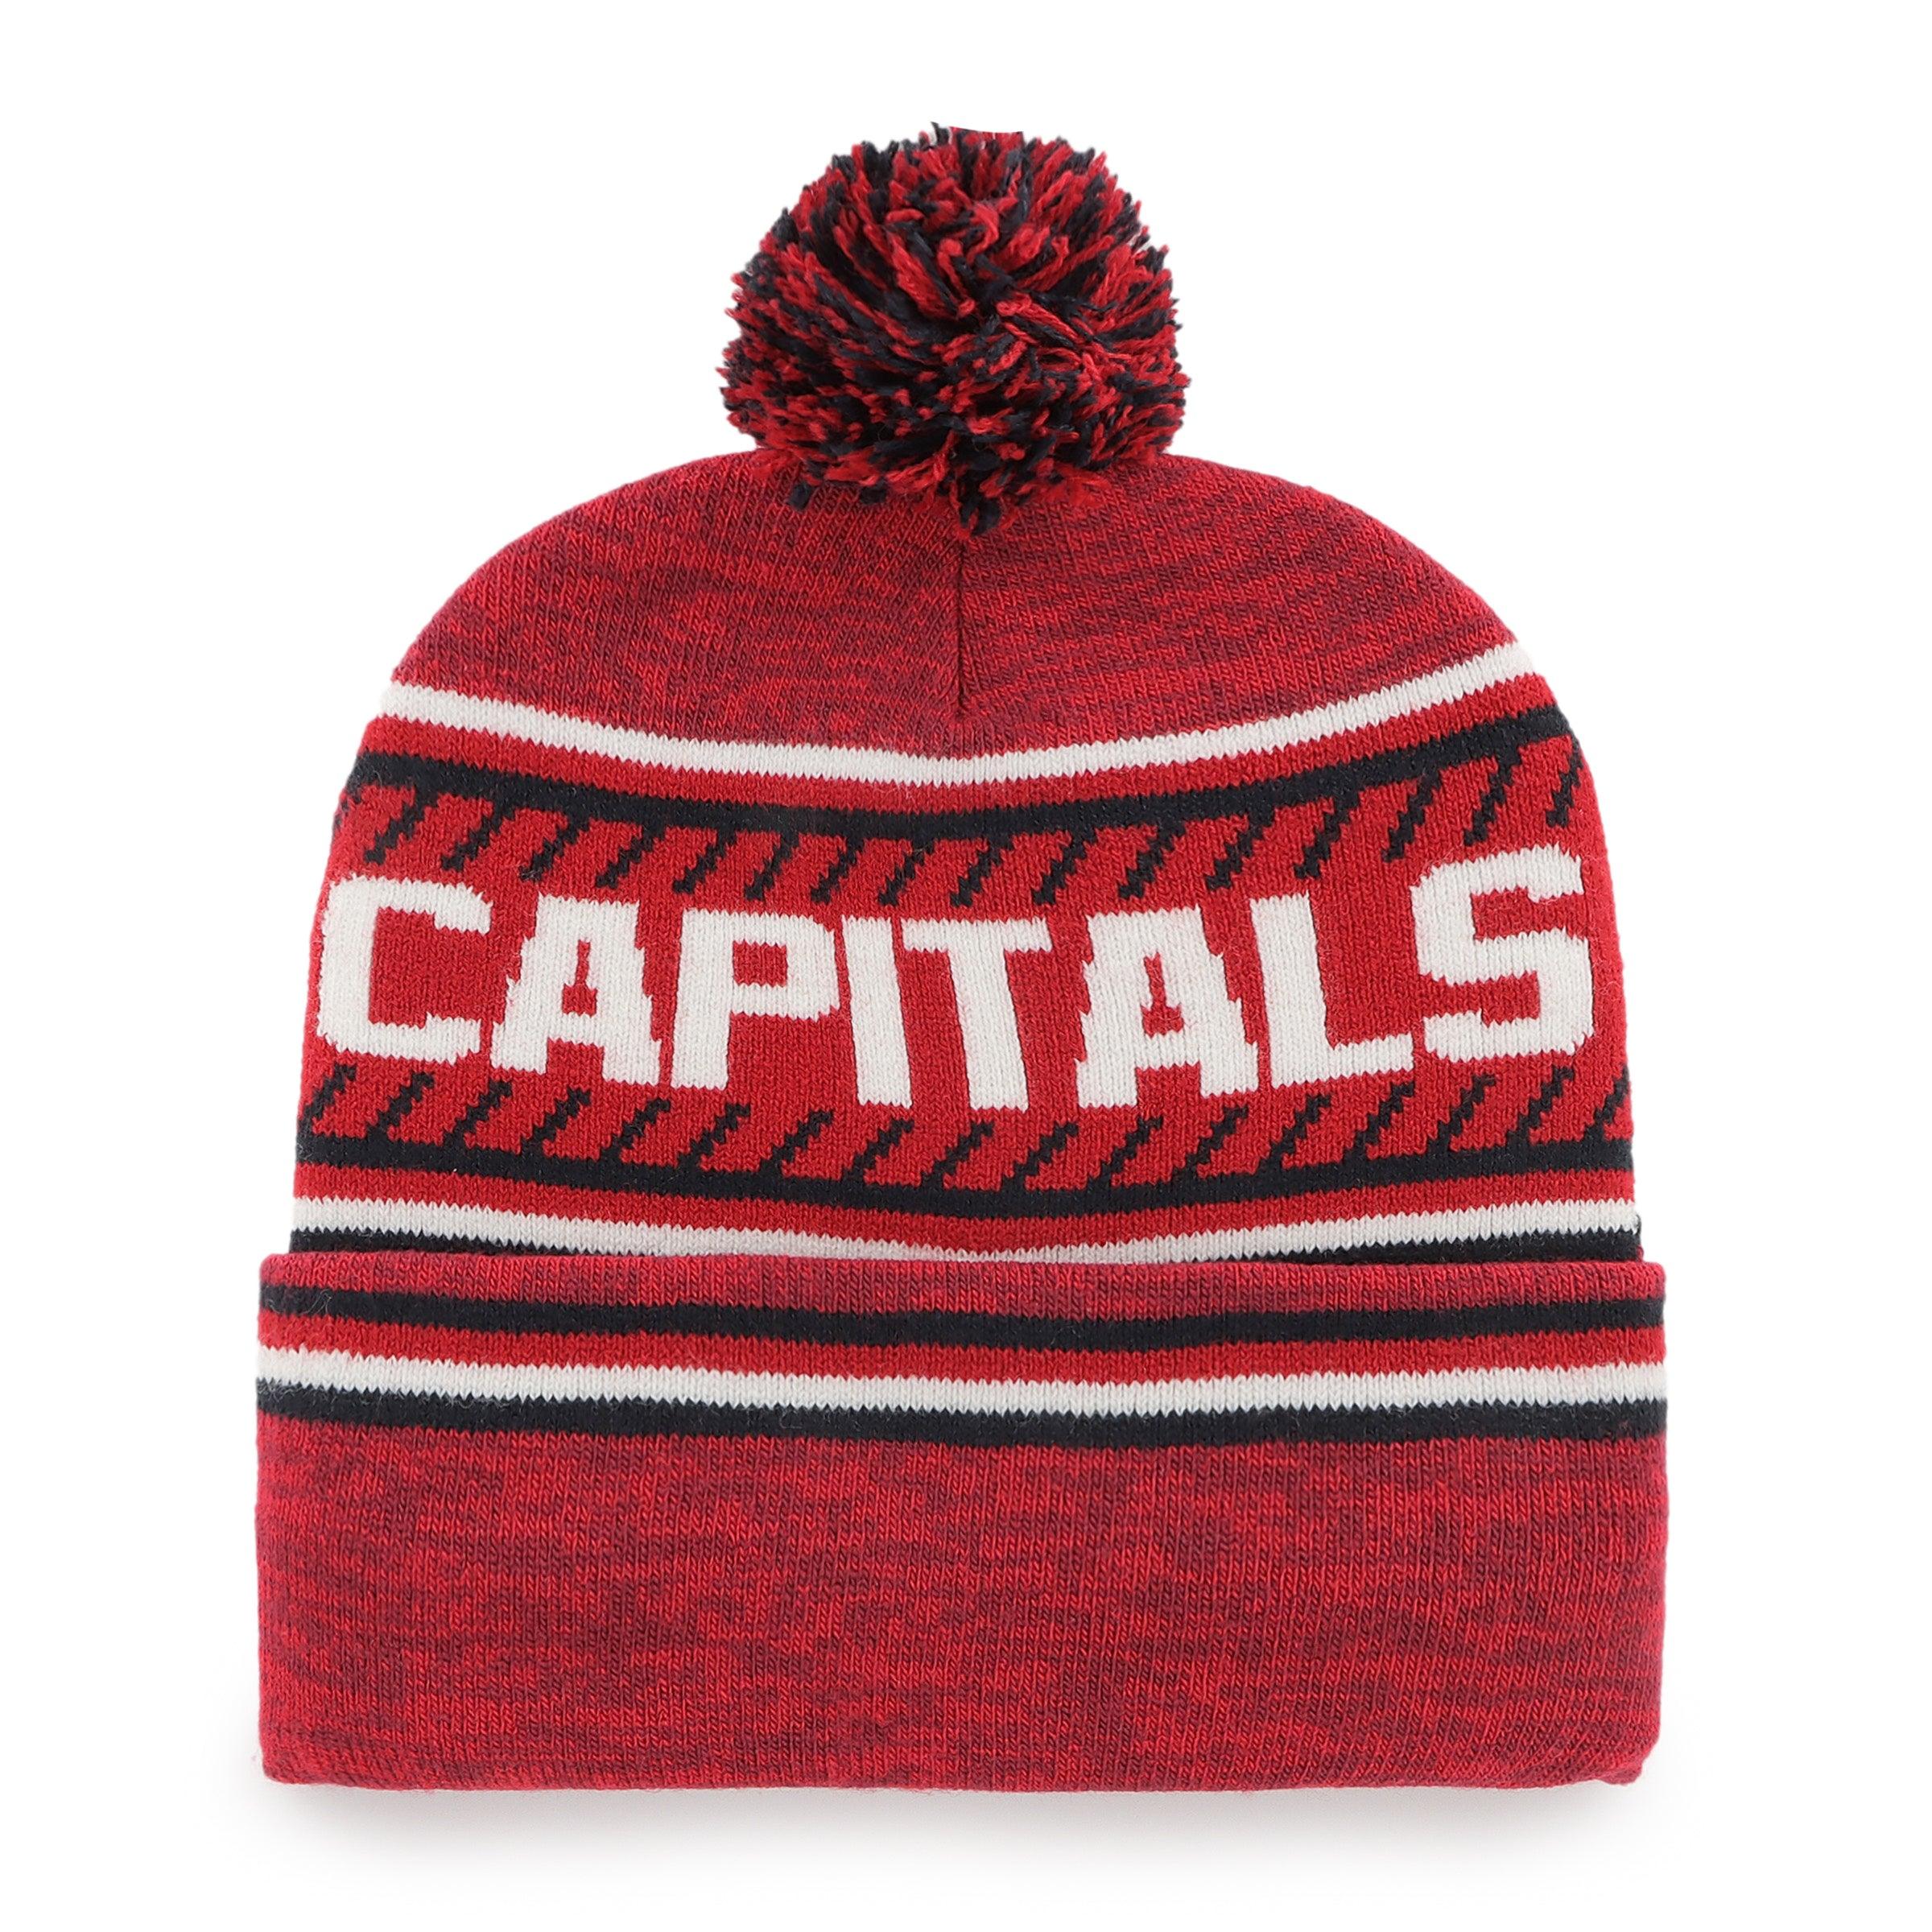 NHL WASHINGTON CAPITALS ICE CAP ´47 CUFF KNIT RED - FAM